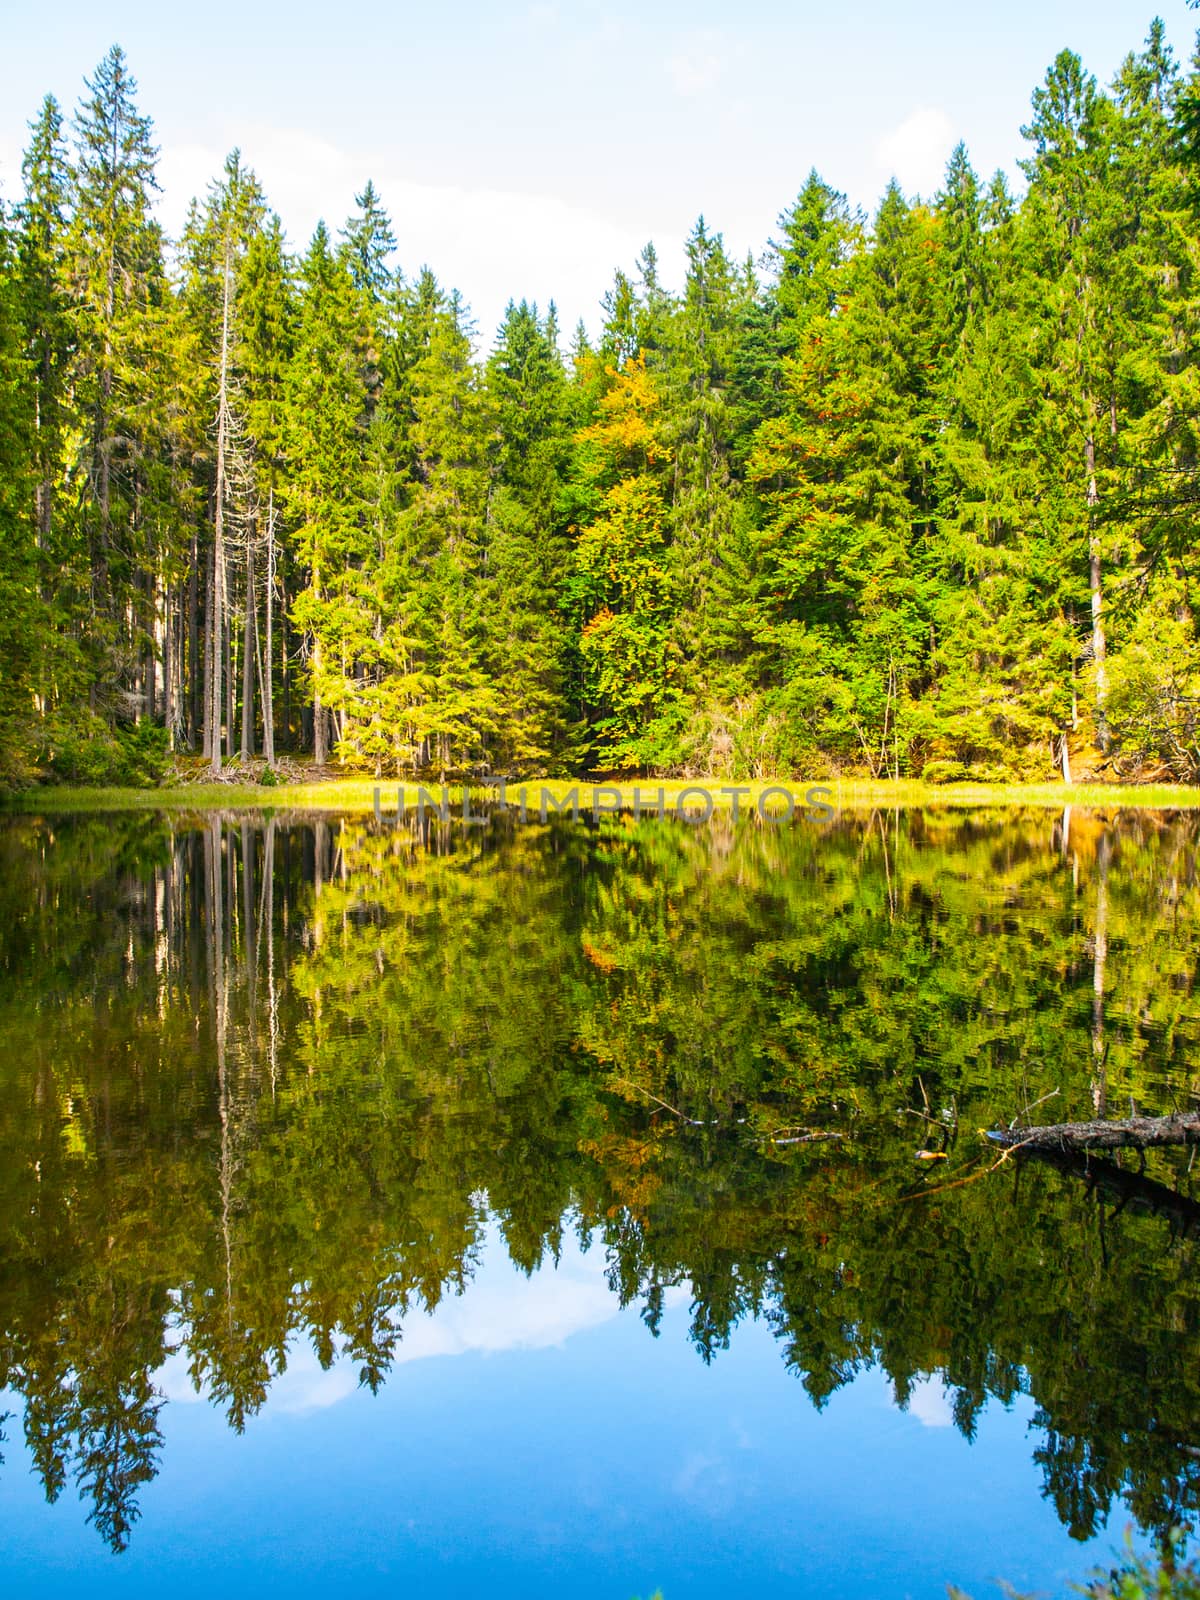 Boubin lake. Reflection of lush green trees of Boubin Primeval Forest, Sumava Mountains, Czech Republic.